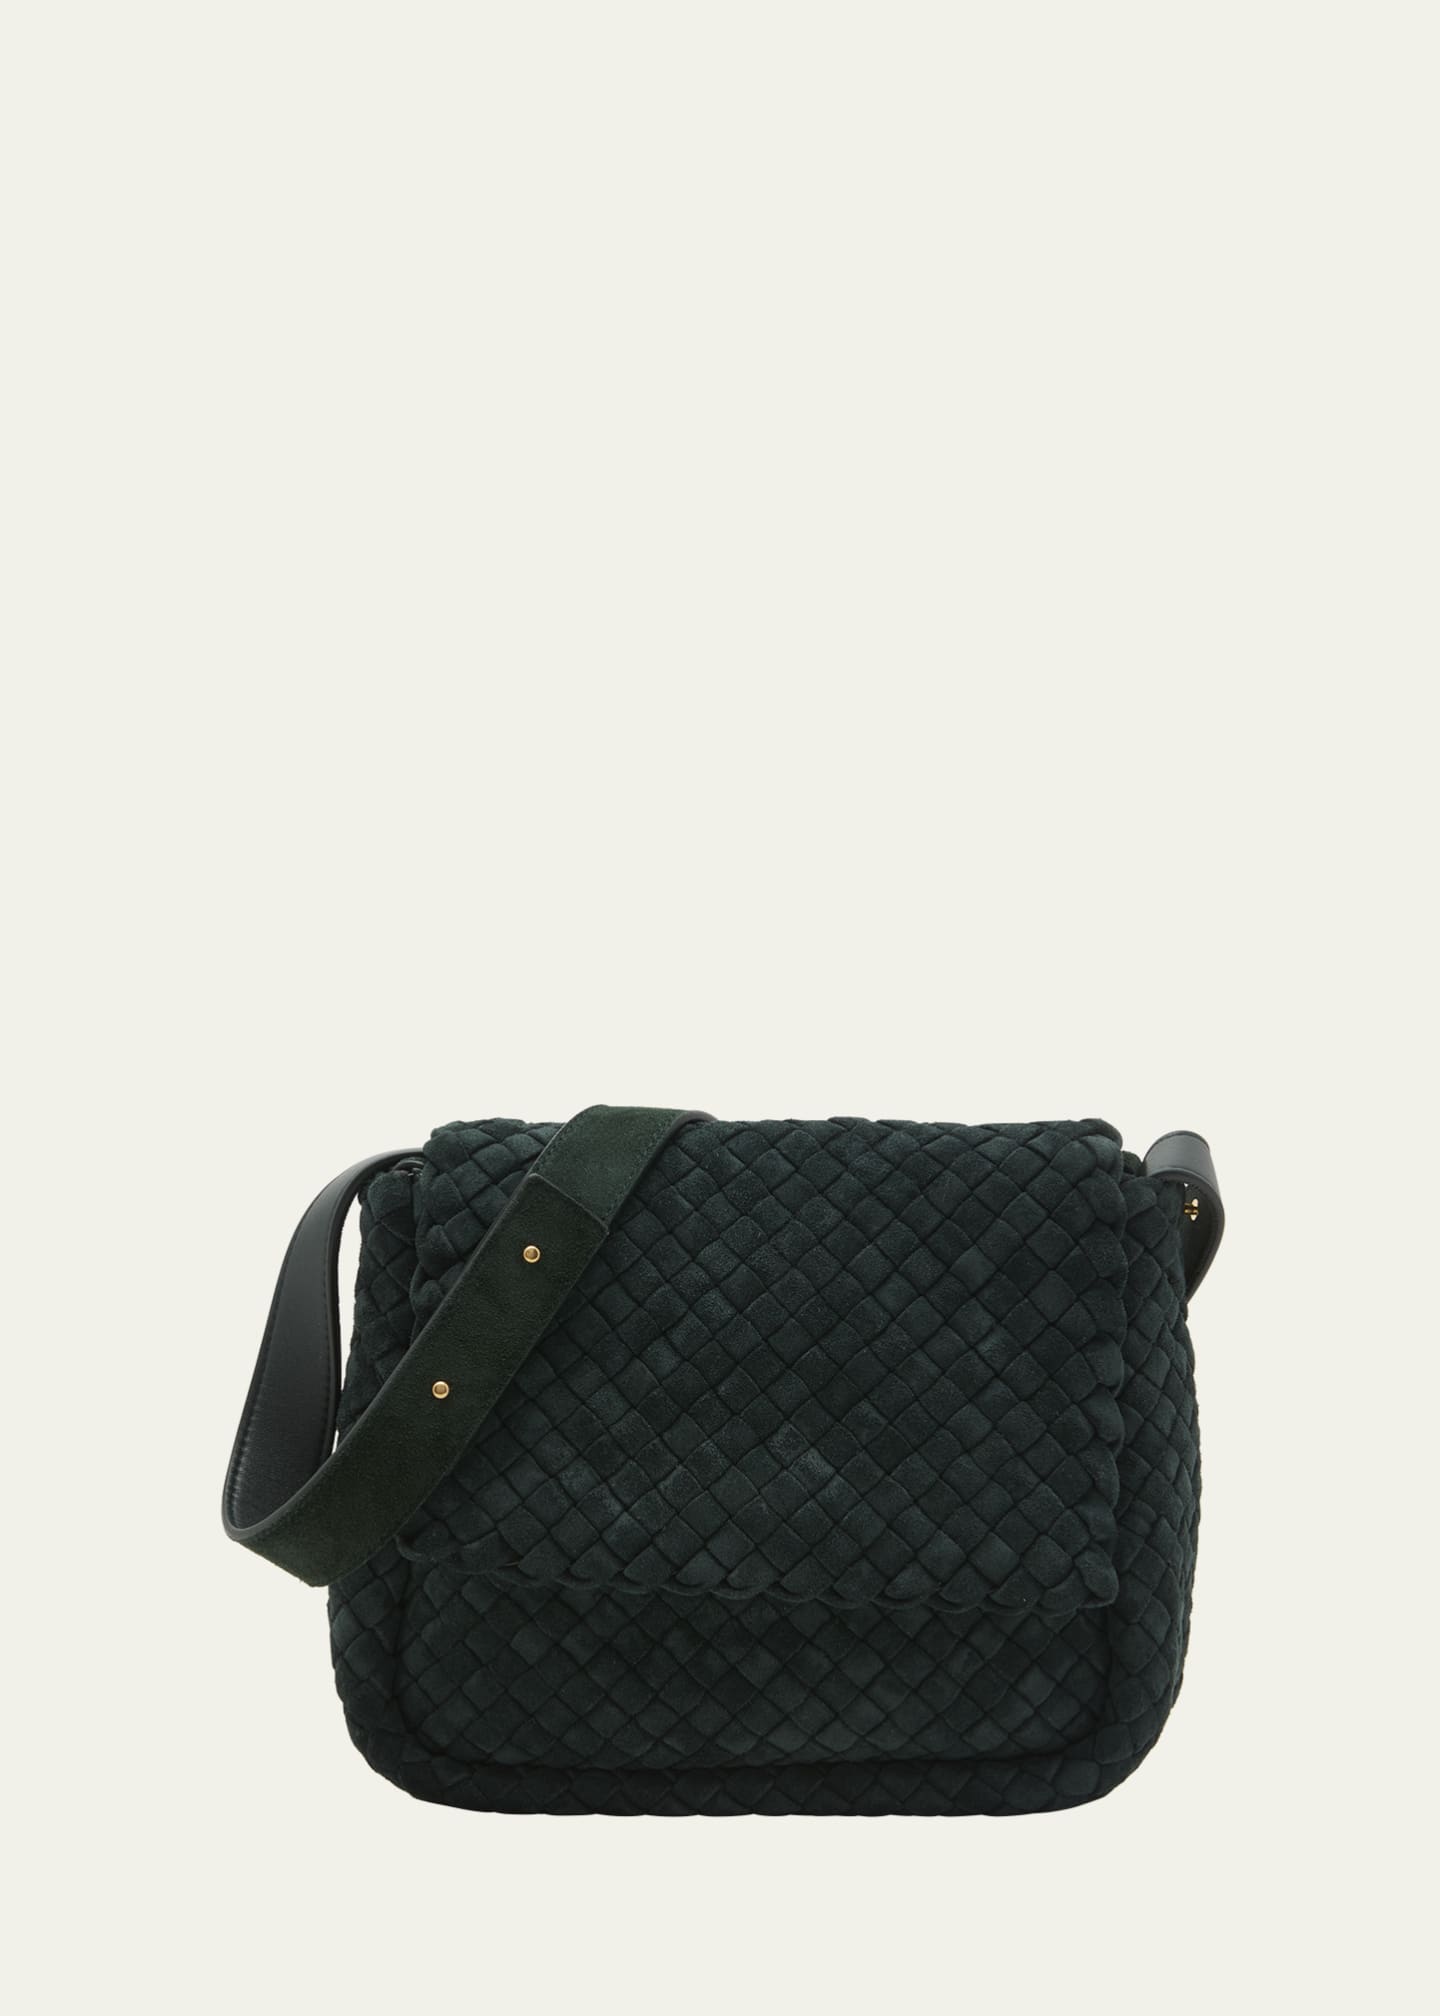 Experience with the Bottega Veneta intrecciato weave? : r/handbags